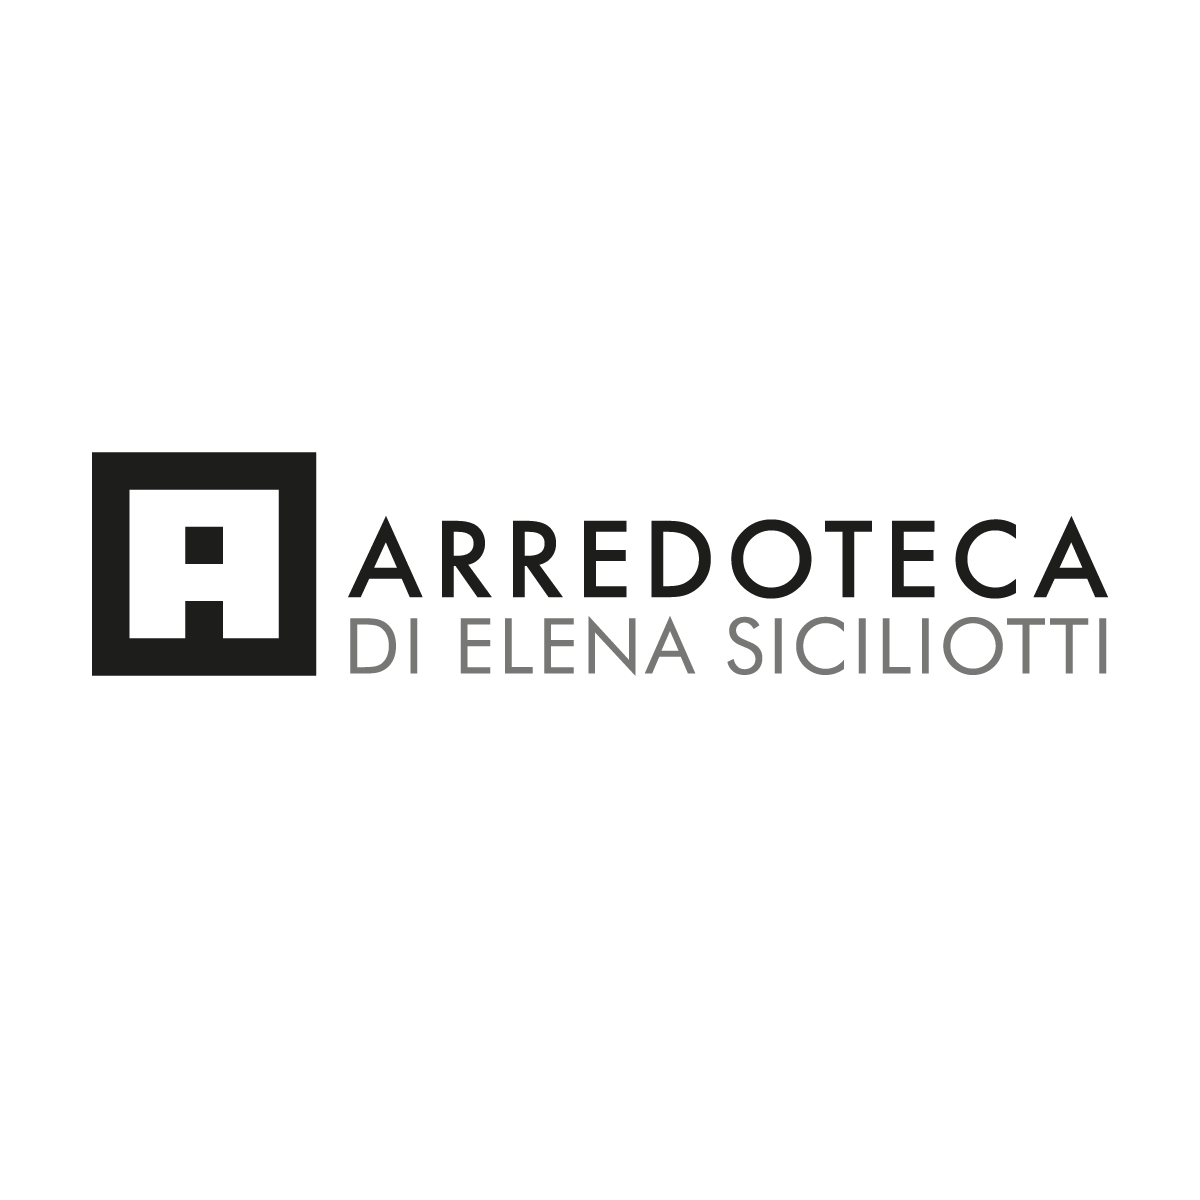 Arredoteca, Logo